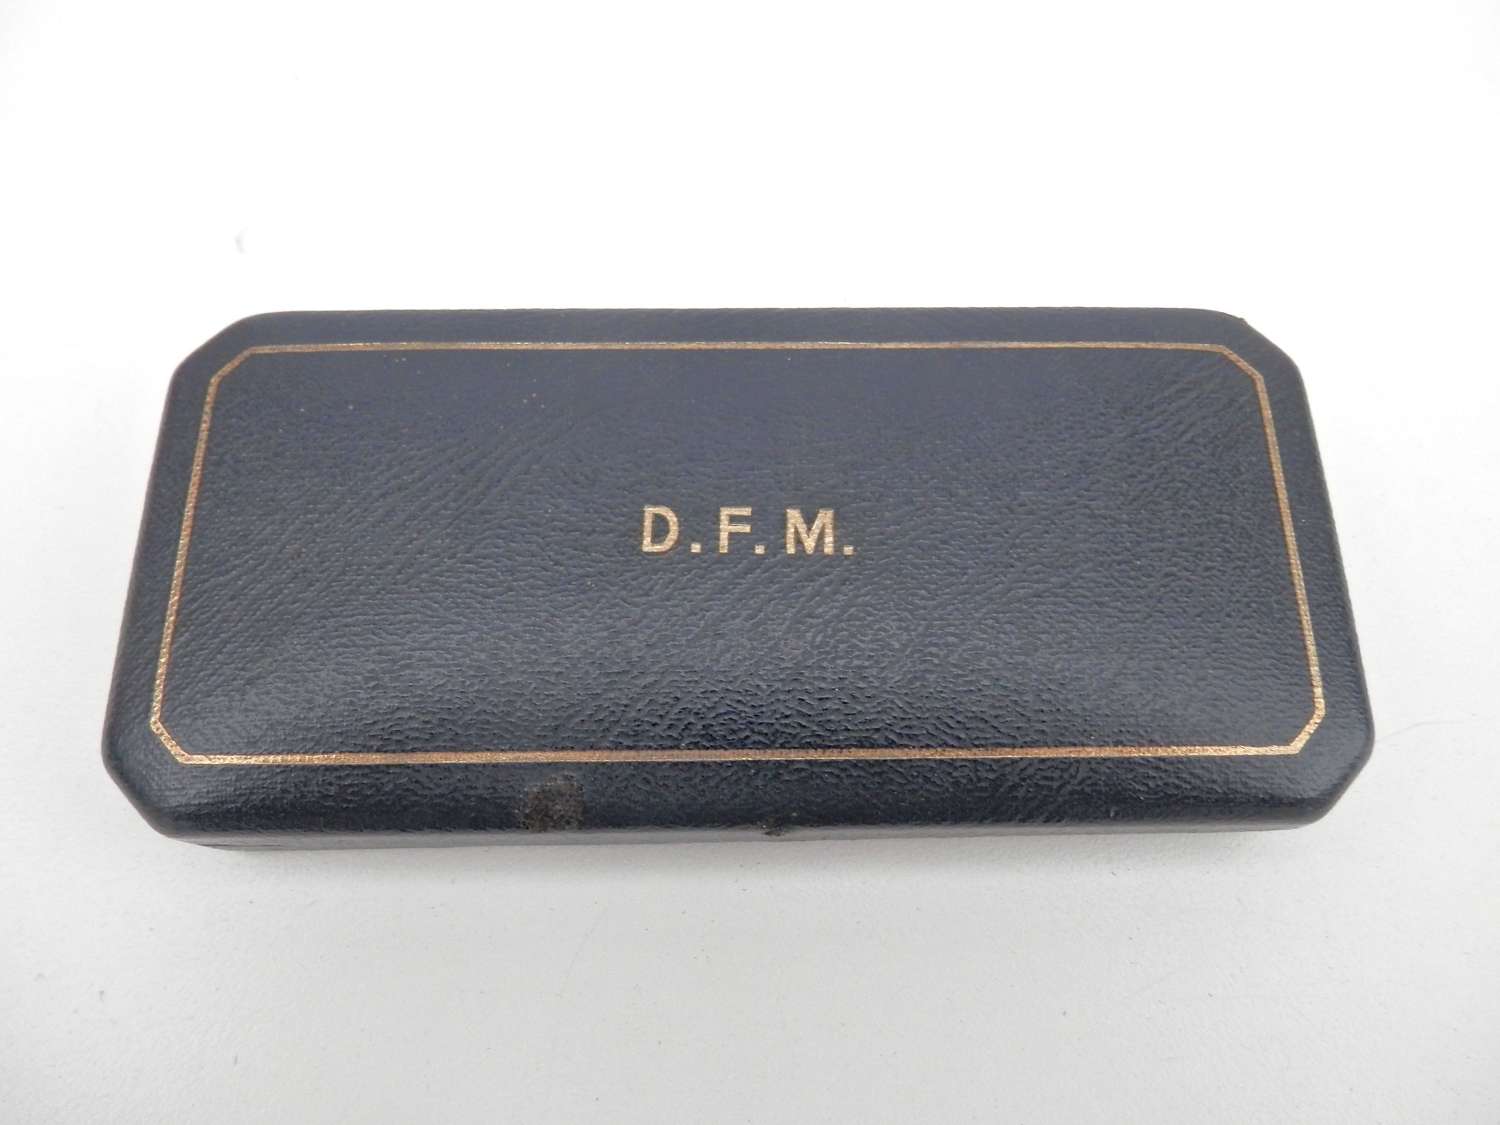 RAF rare DFM medal case